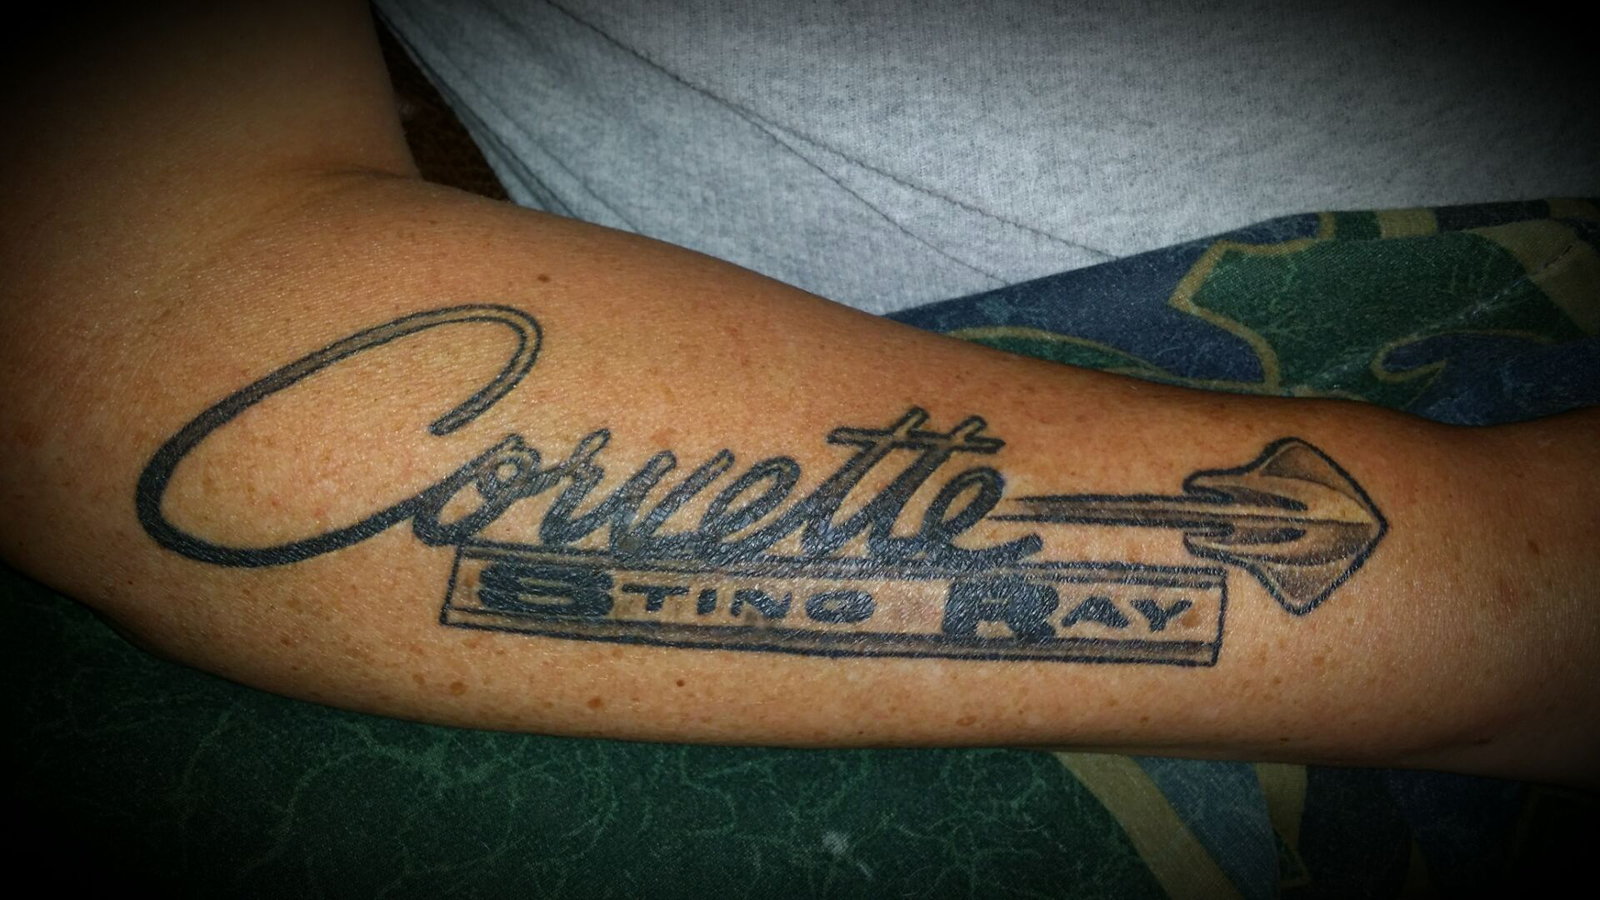 C6 Corvette tattoo